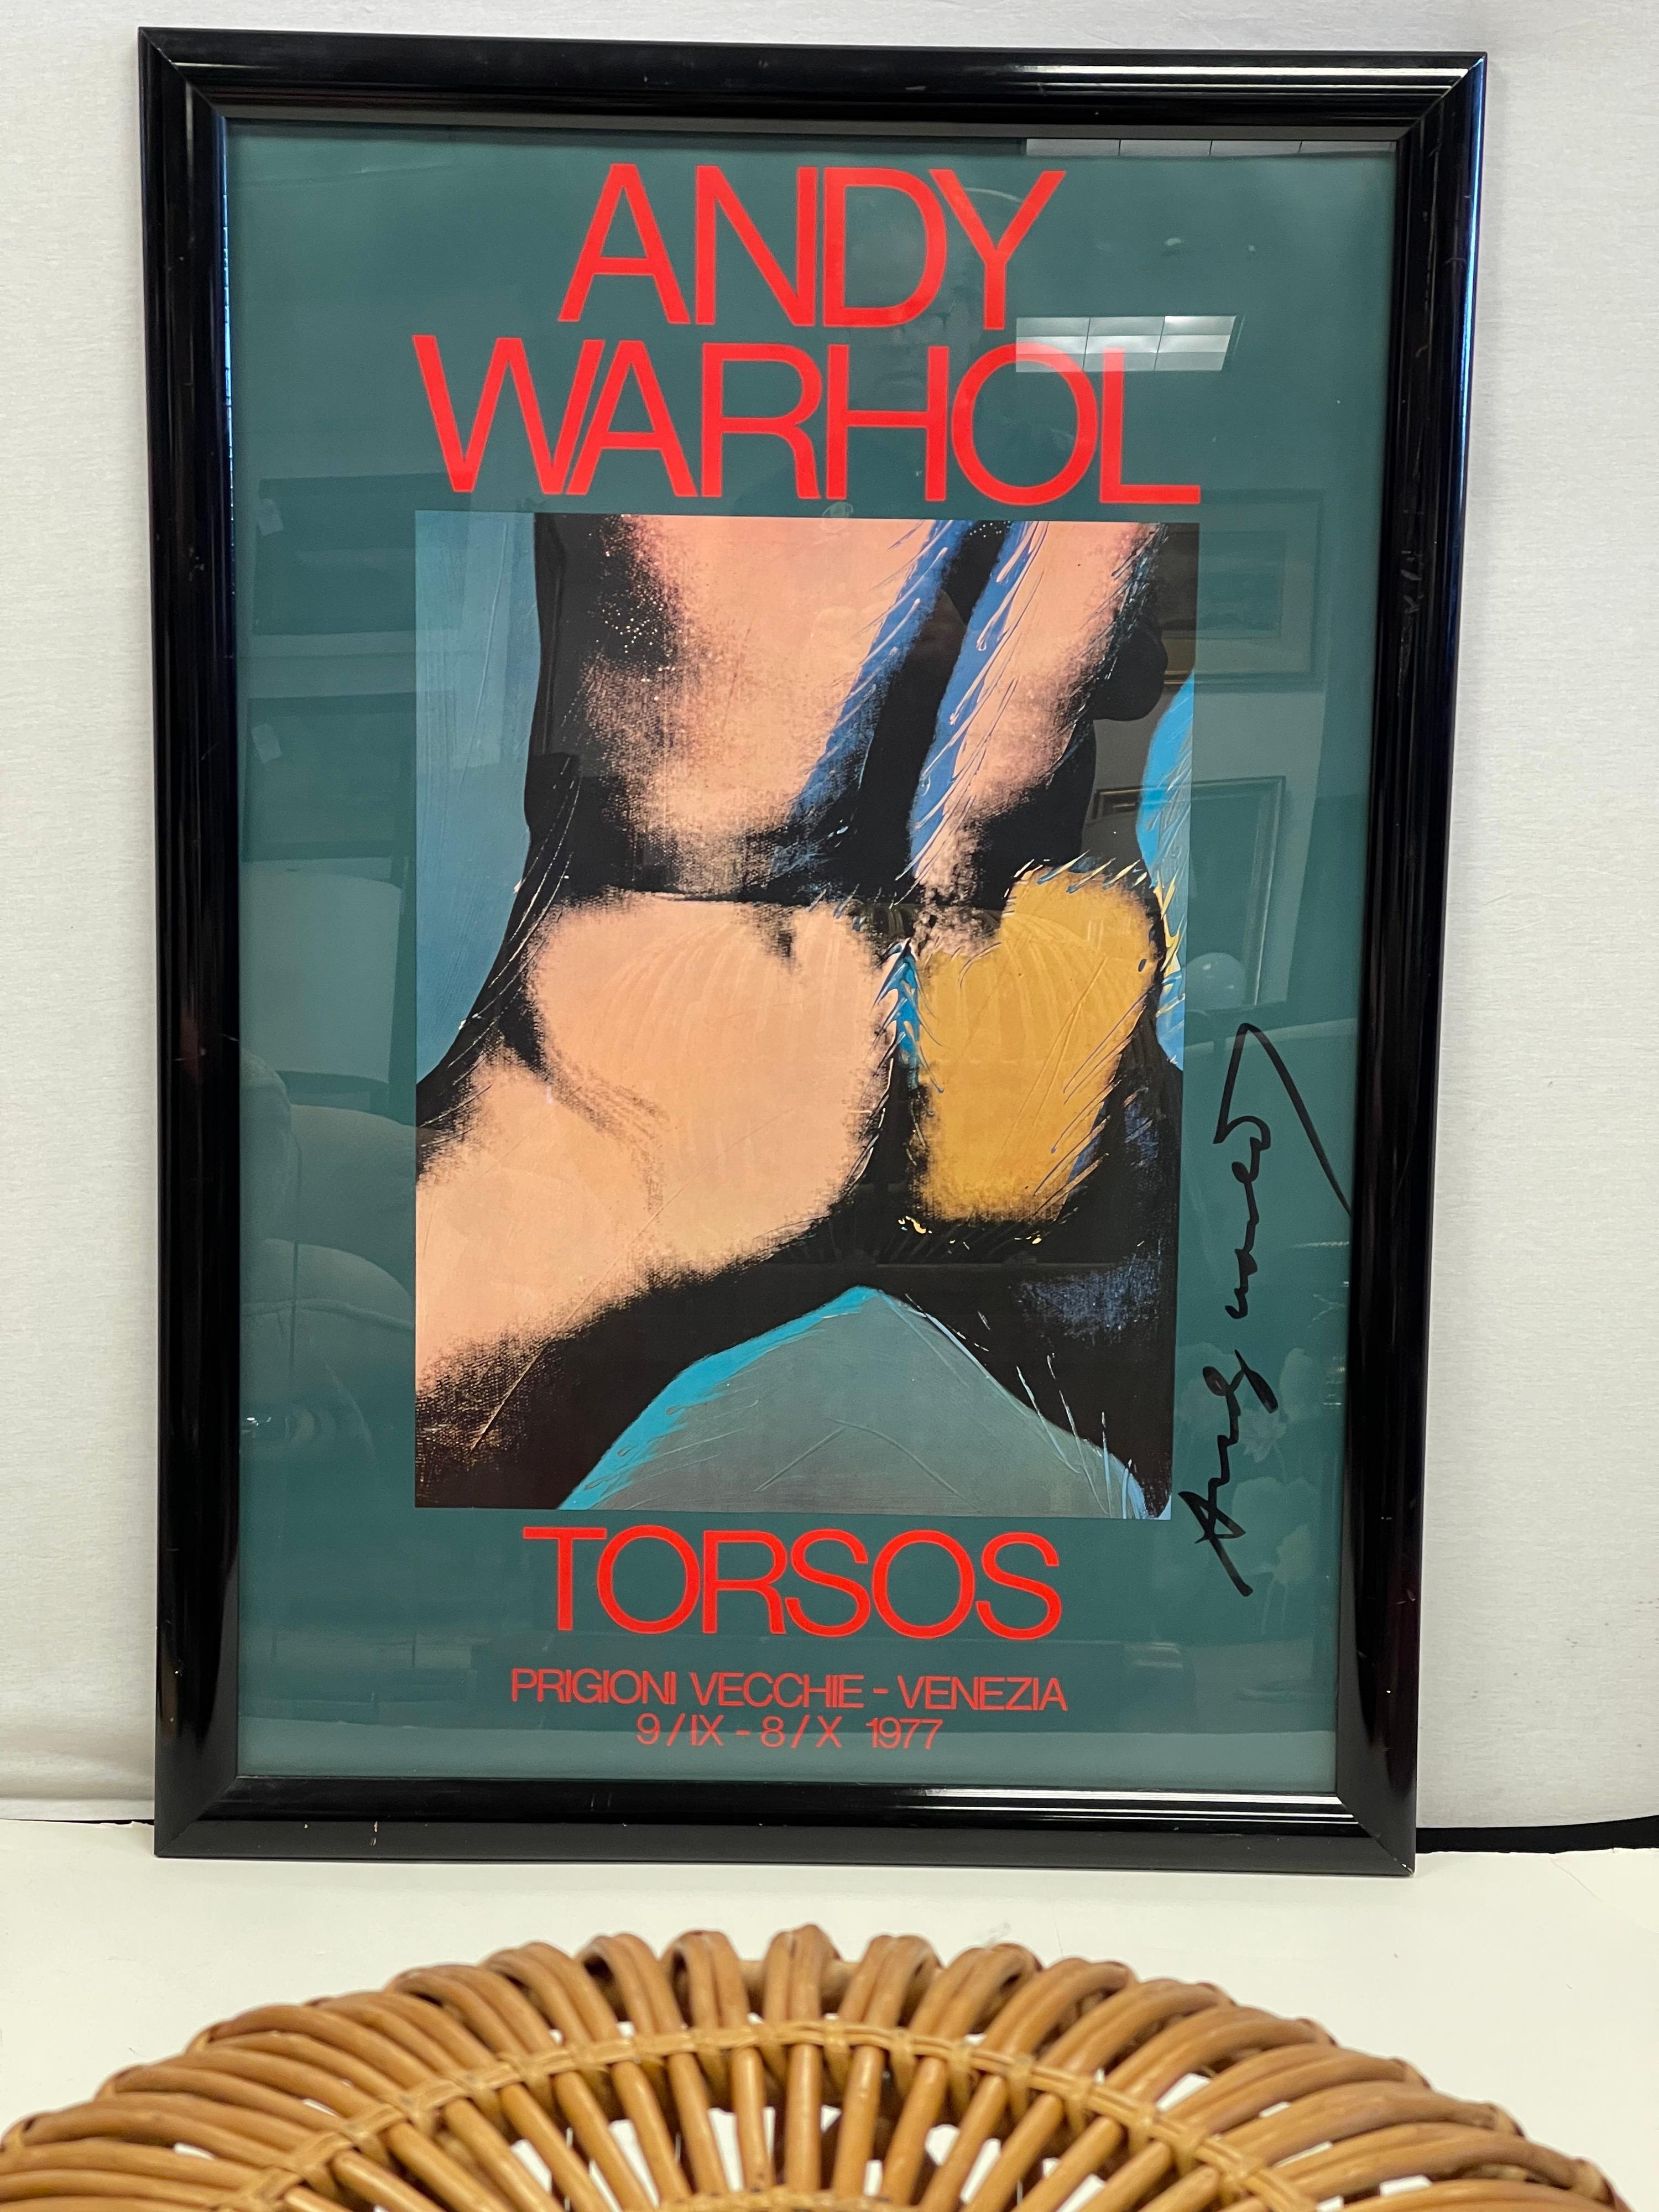 Signed Andy Warhol Torsos 1977 Lithograph Framed Prigioni Vecchie Venezia Rare 1